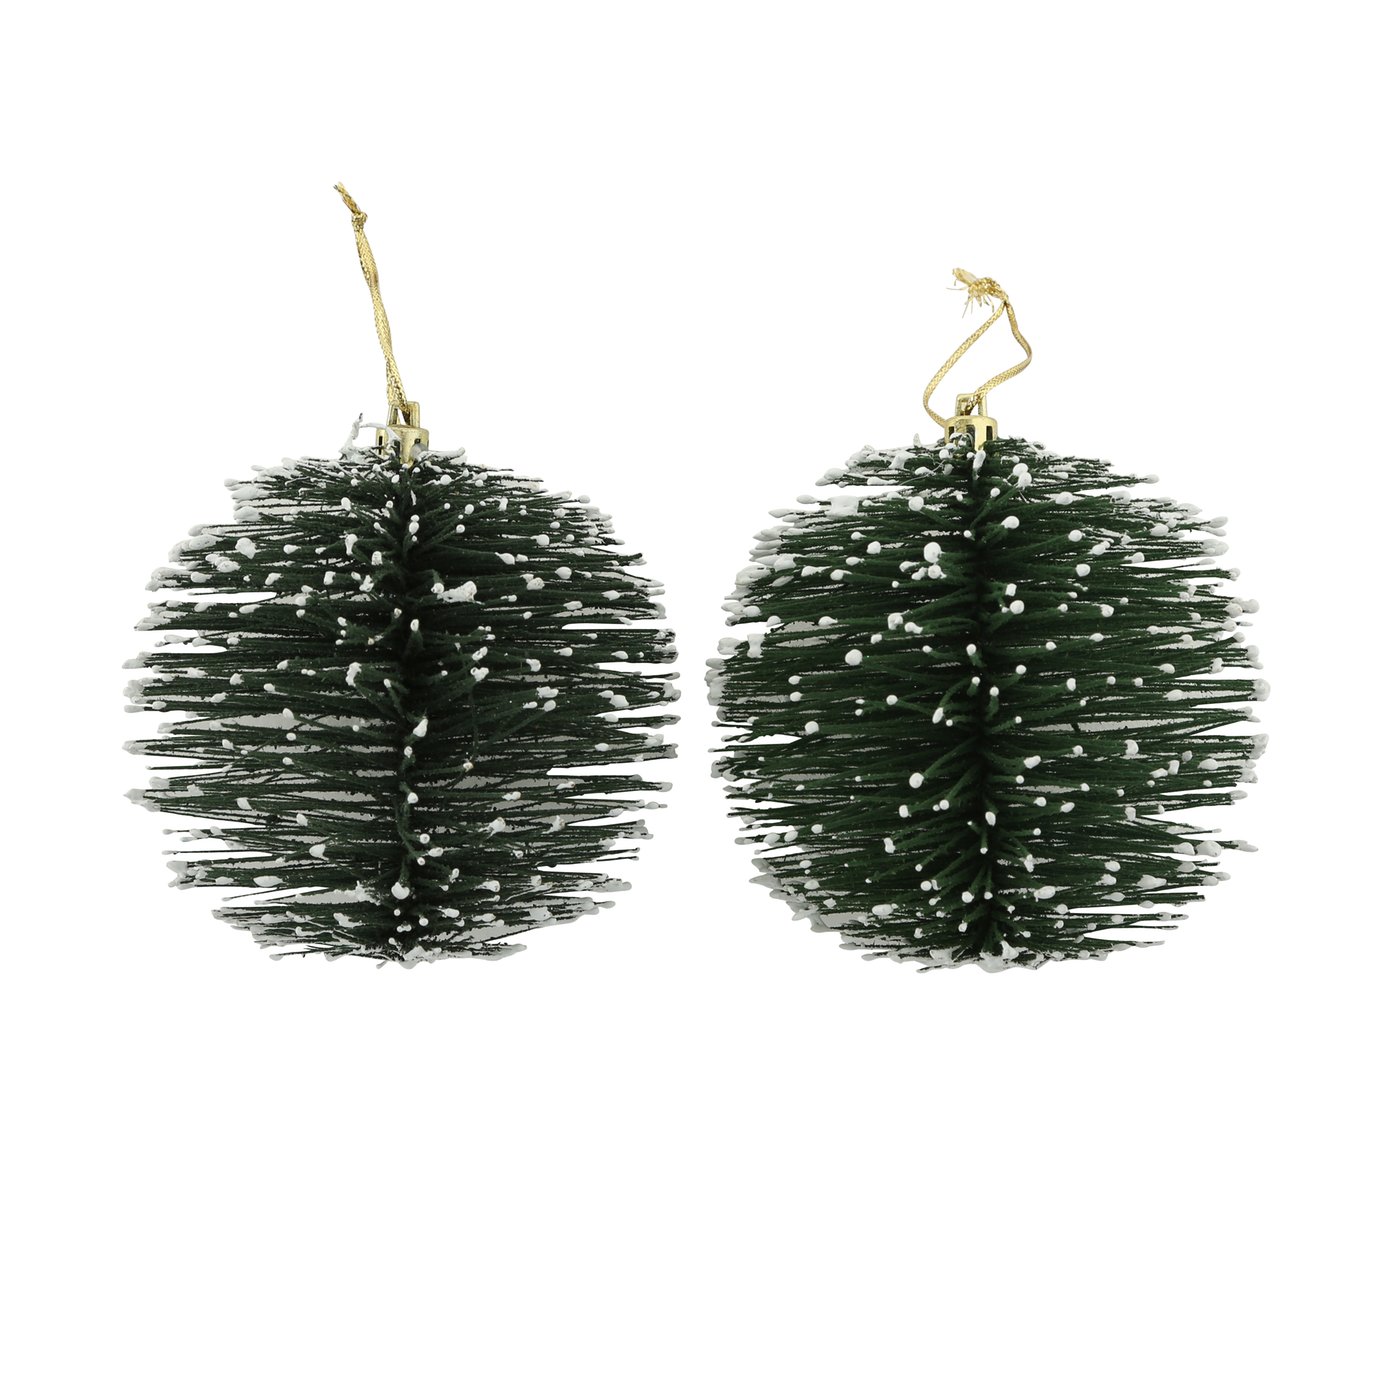 Deko Kugel Weihnachtskugel grün beschneit 2er Set - D 10cm, 1015282, 4020607645615, Boltze Weihnachtsdekoration